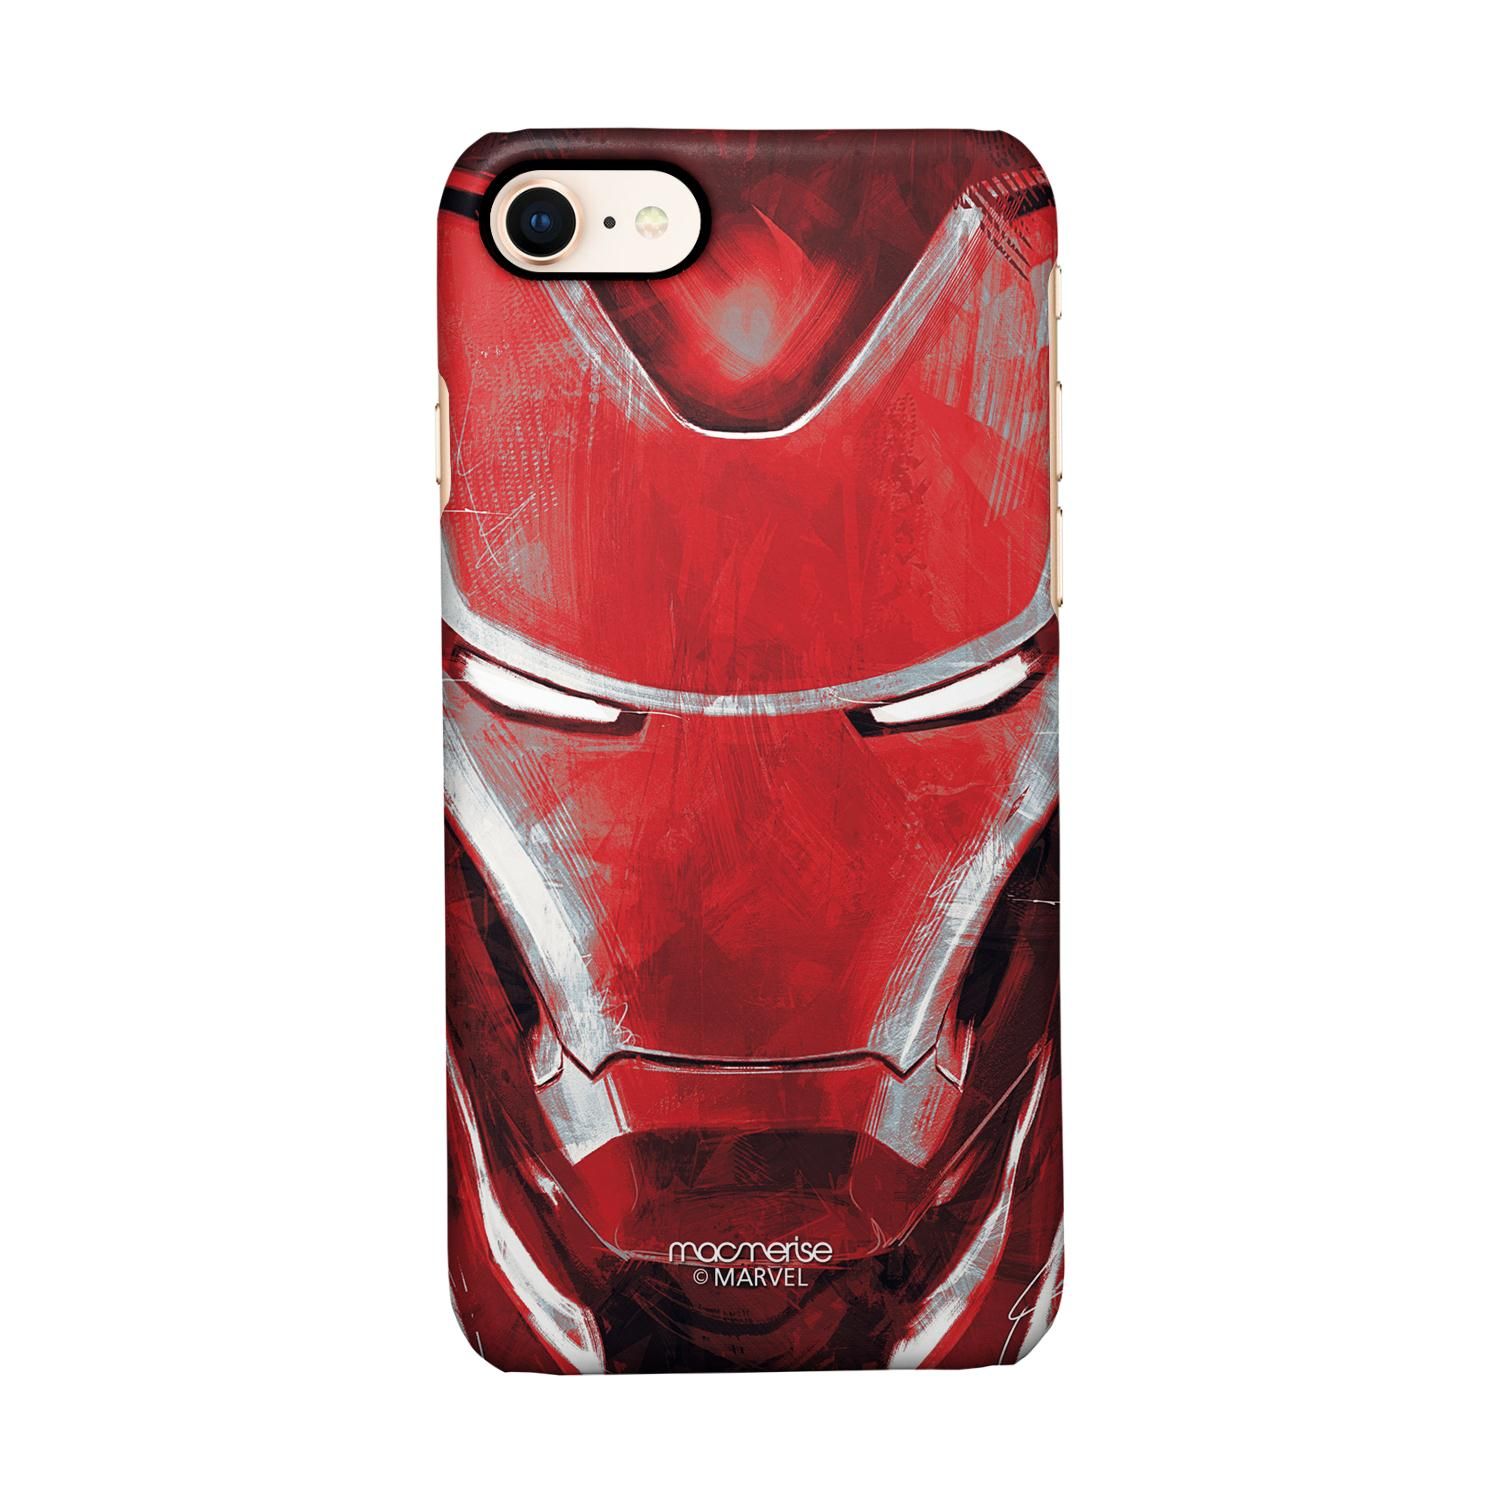 Buy Charcoal Art Iron man - Sleek Phone Case for iPhone 8 Online